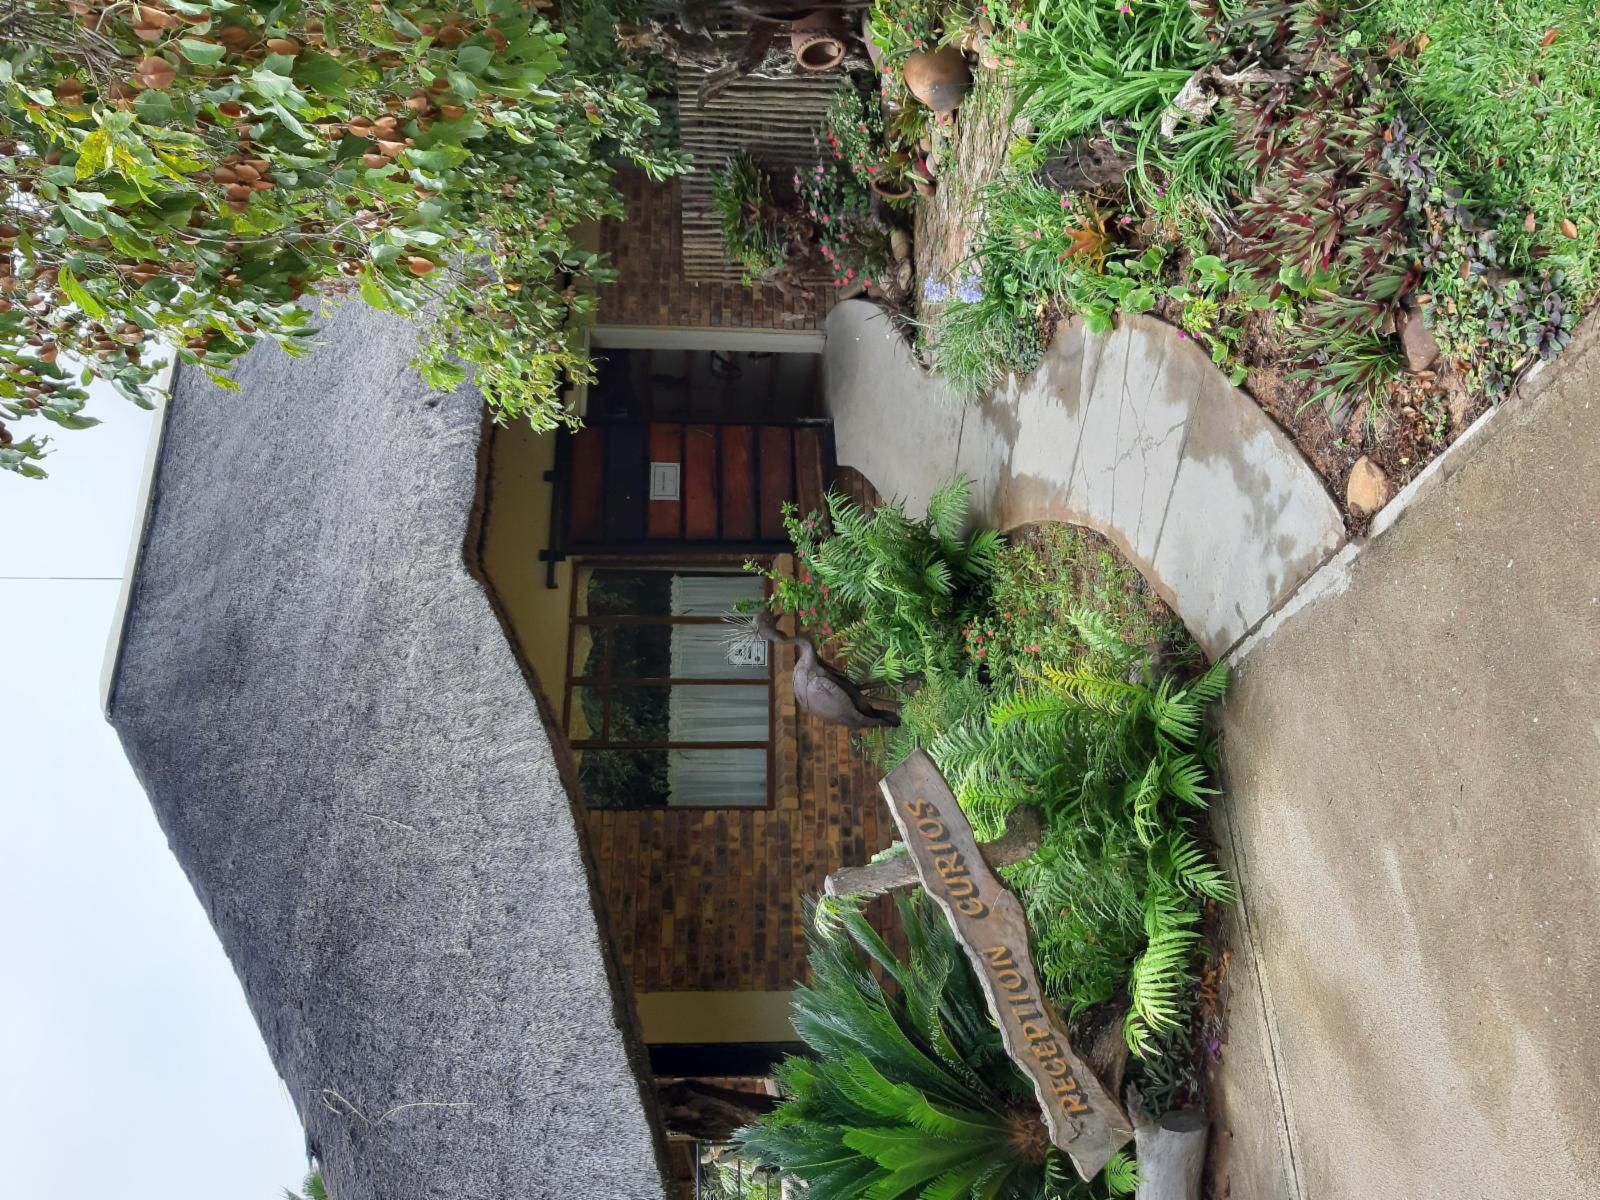 Matumi Lodge Klaserie Limpopo Province South Africa House, Building, Architecture, Plant, Nature, Garden